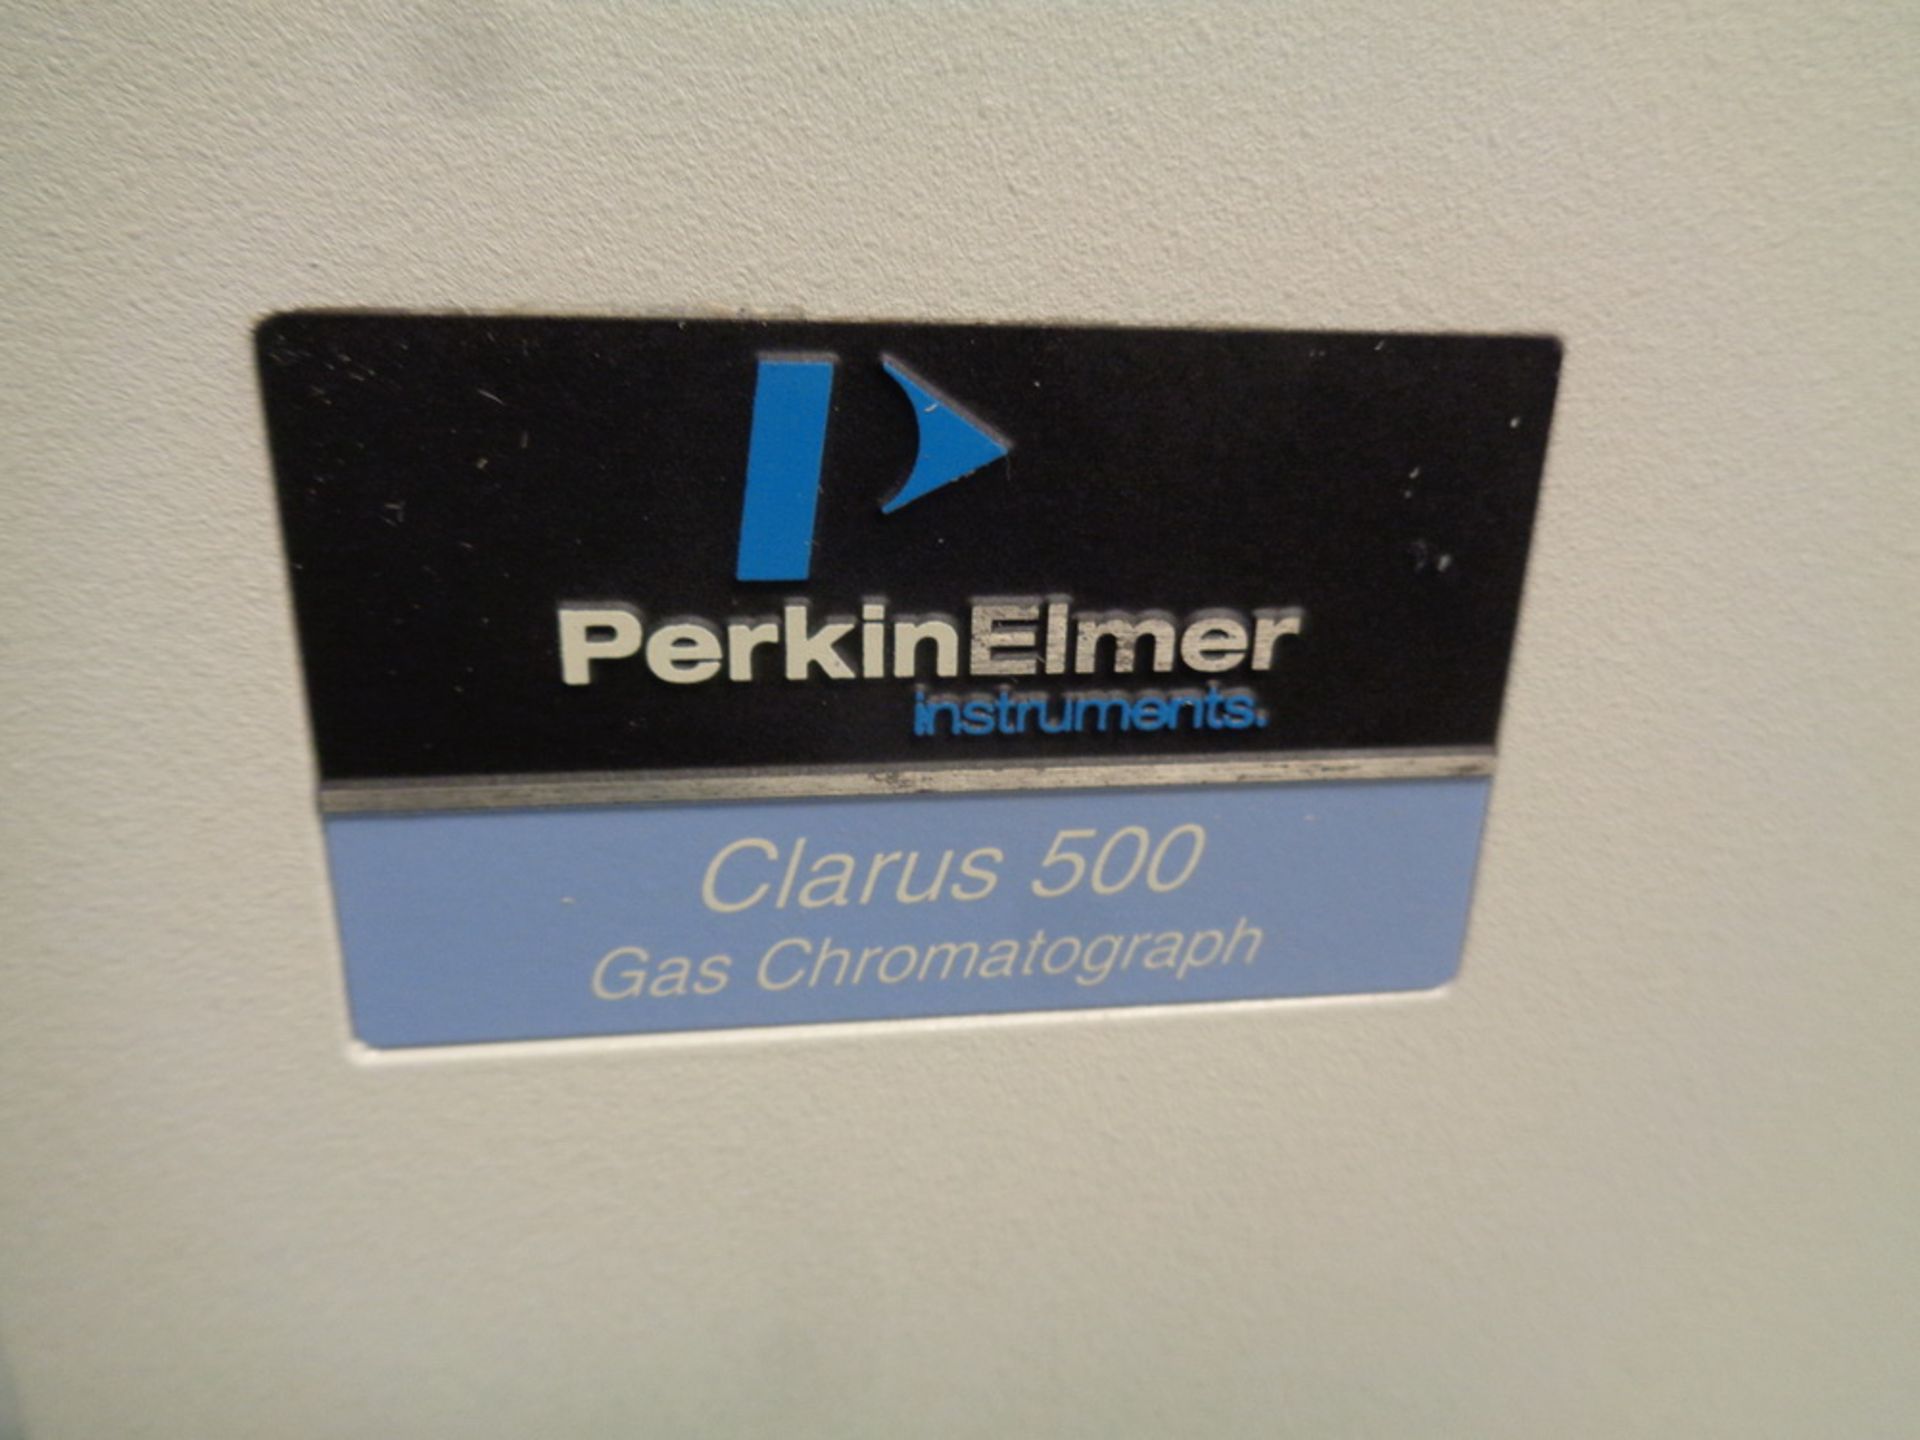 Perkin Elmer Gas Chromatograph, Model Clarus 500, S/N 650N3012706 - Image 4 of 8